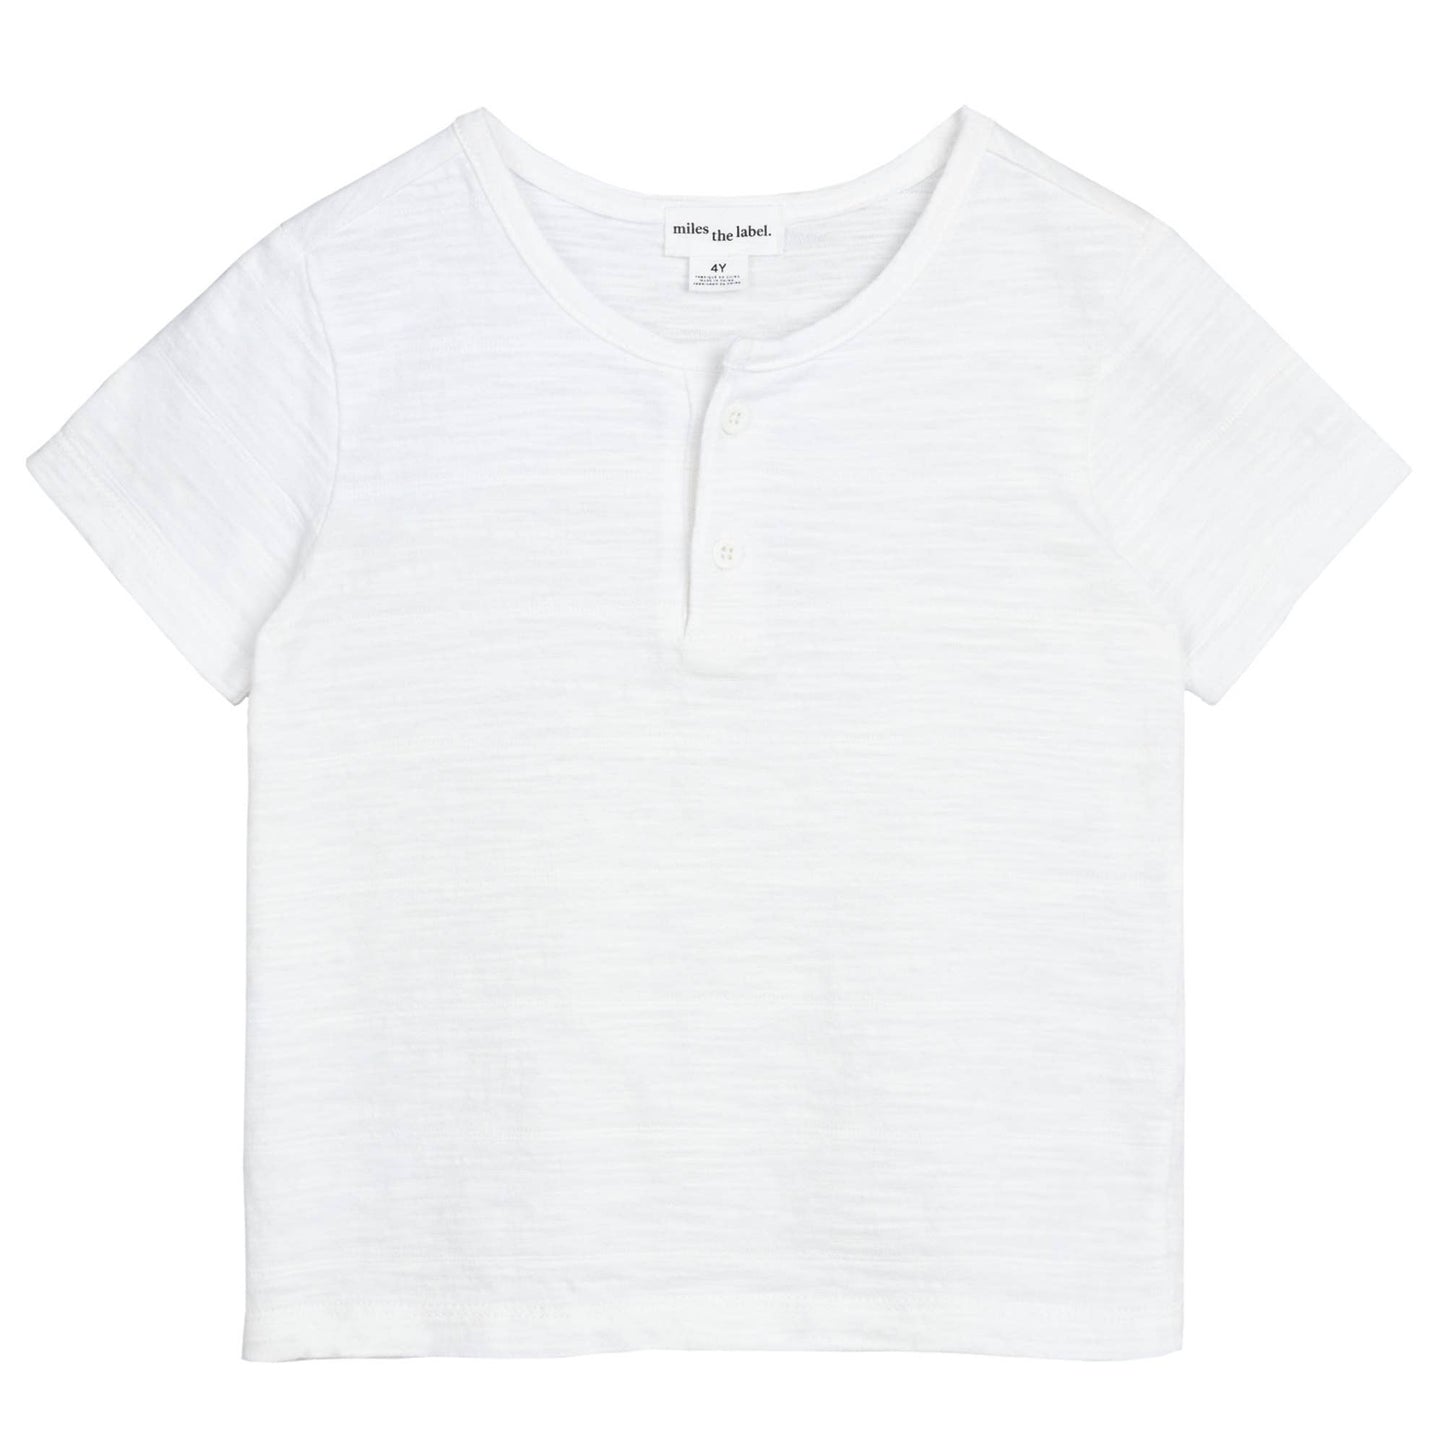 Short-Sleeve Textured Slub Jersey Off-White Henley